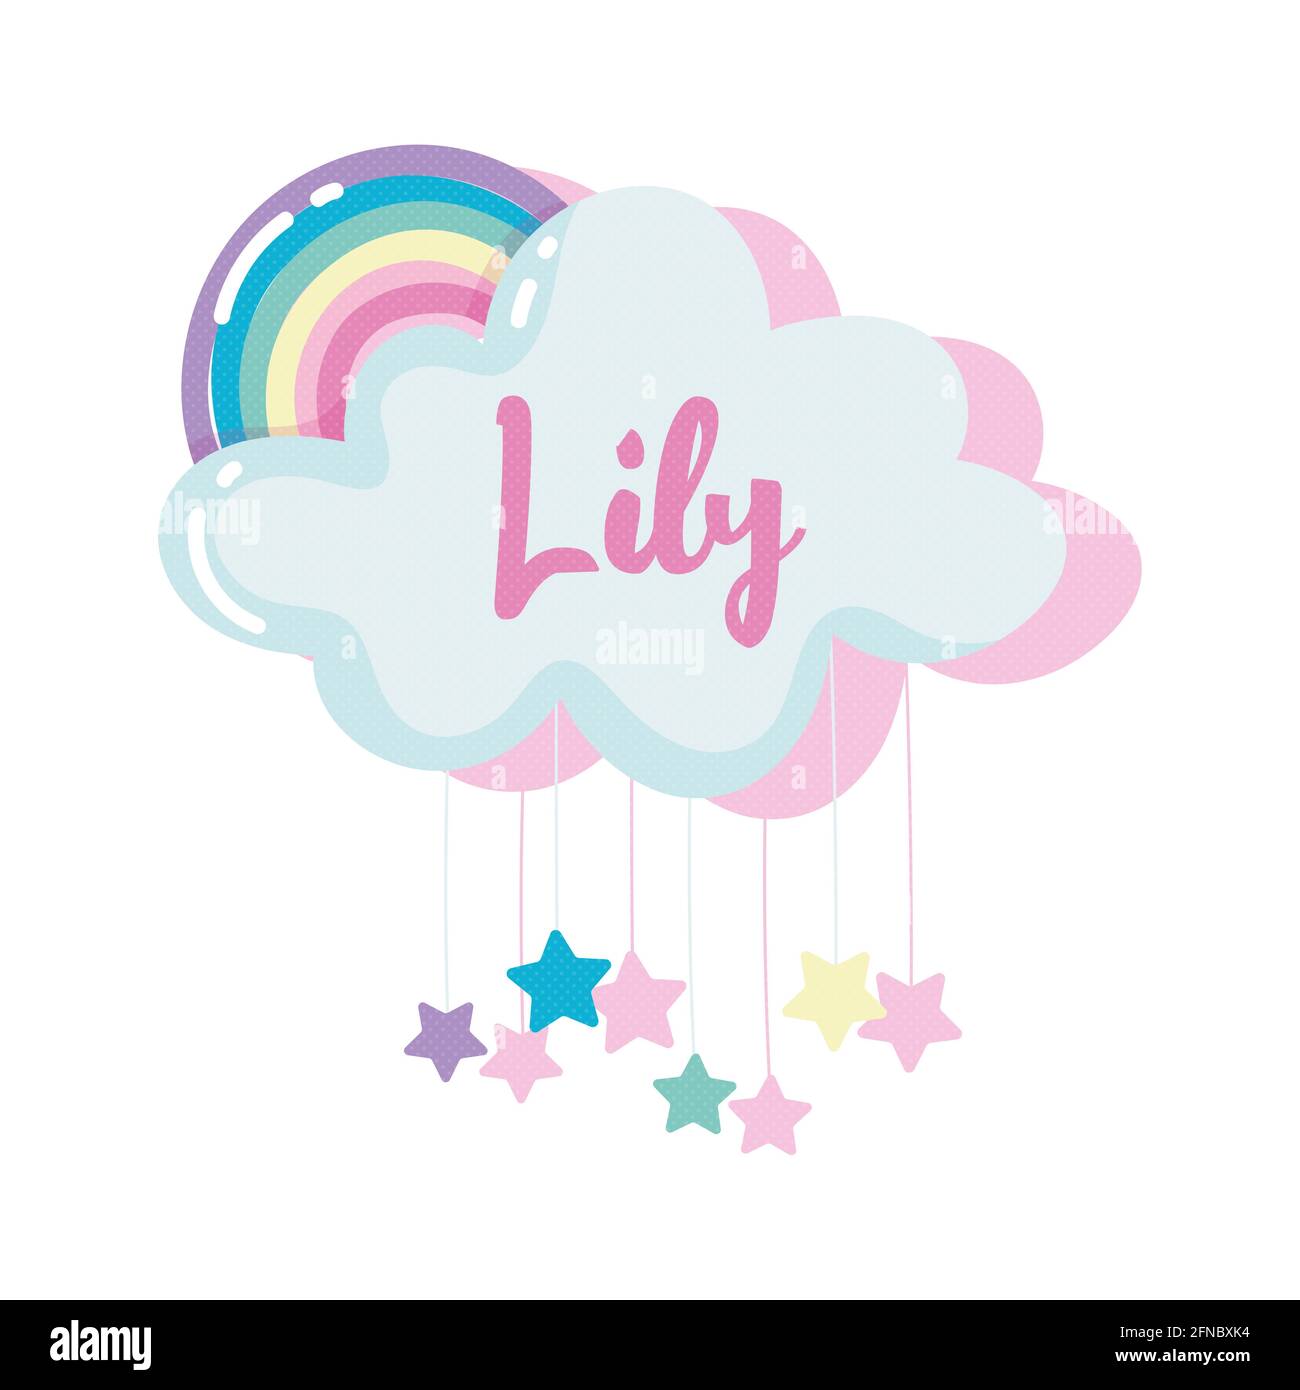 lily girl name Stock Photo